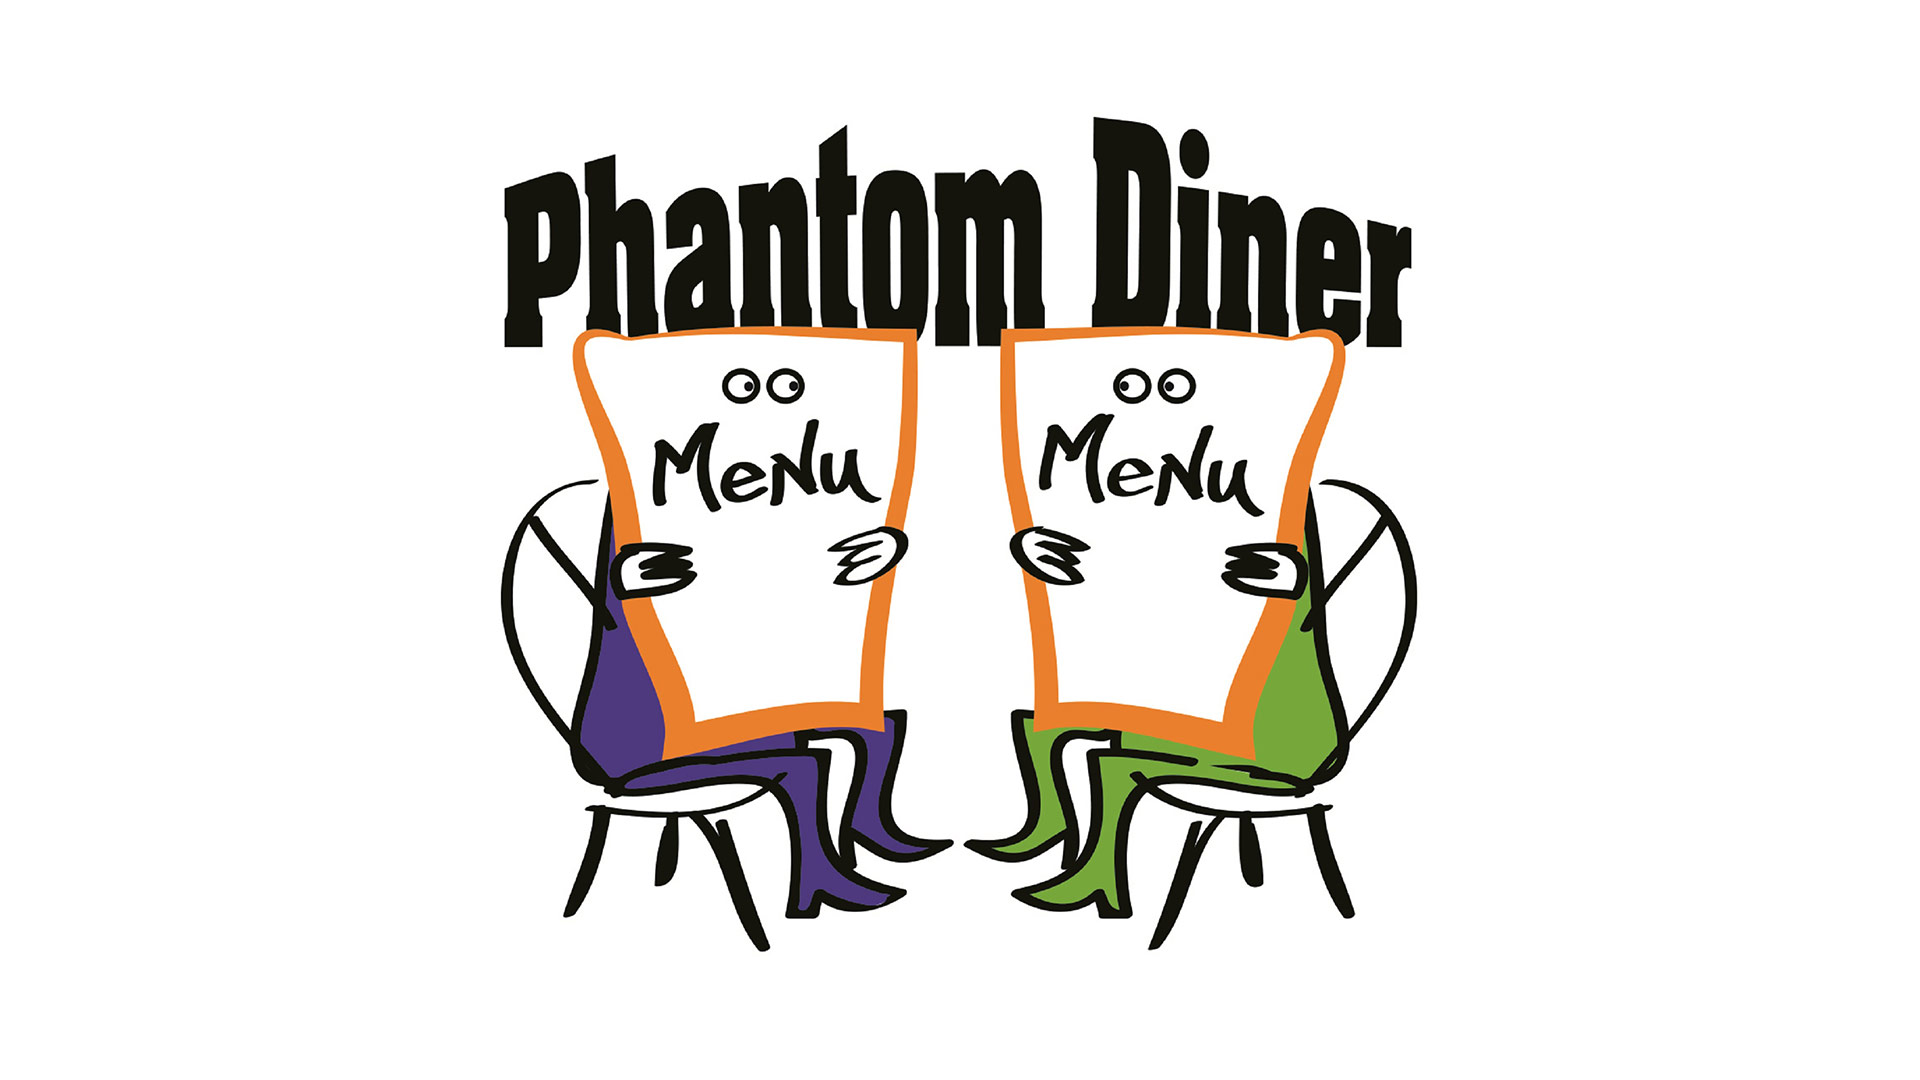 Phantom Diner